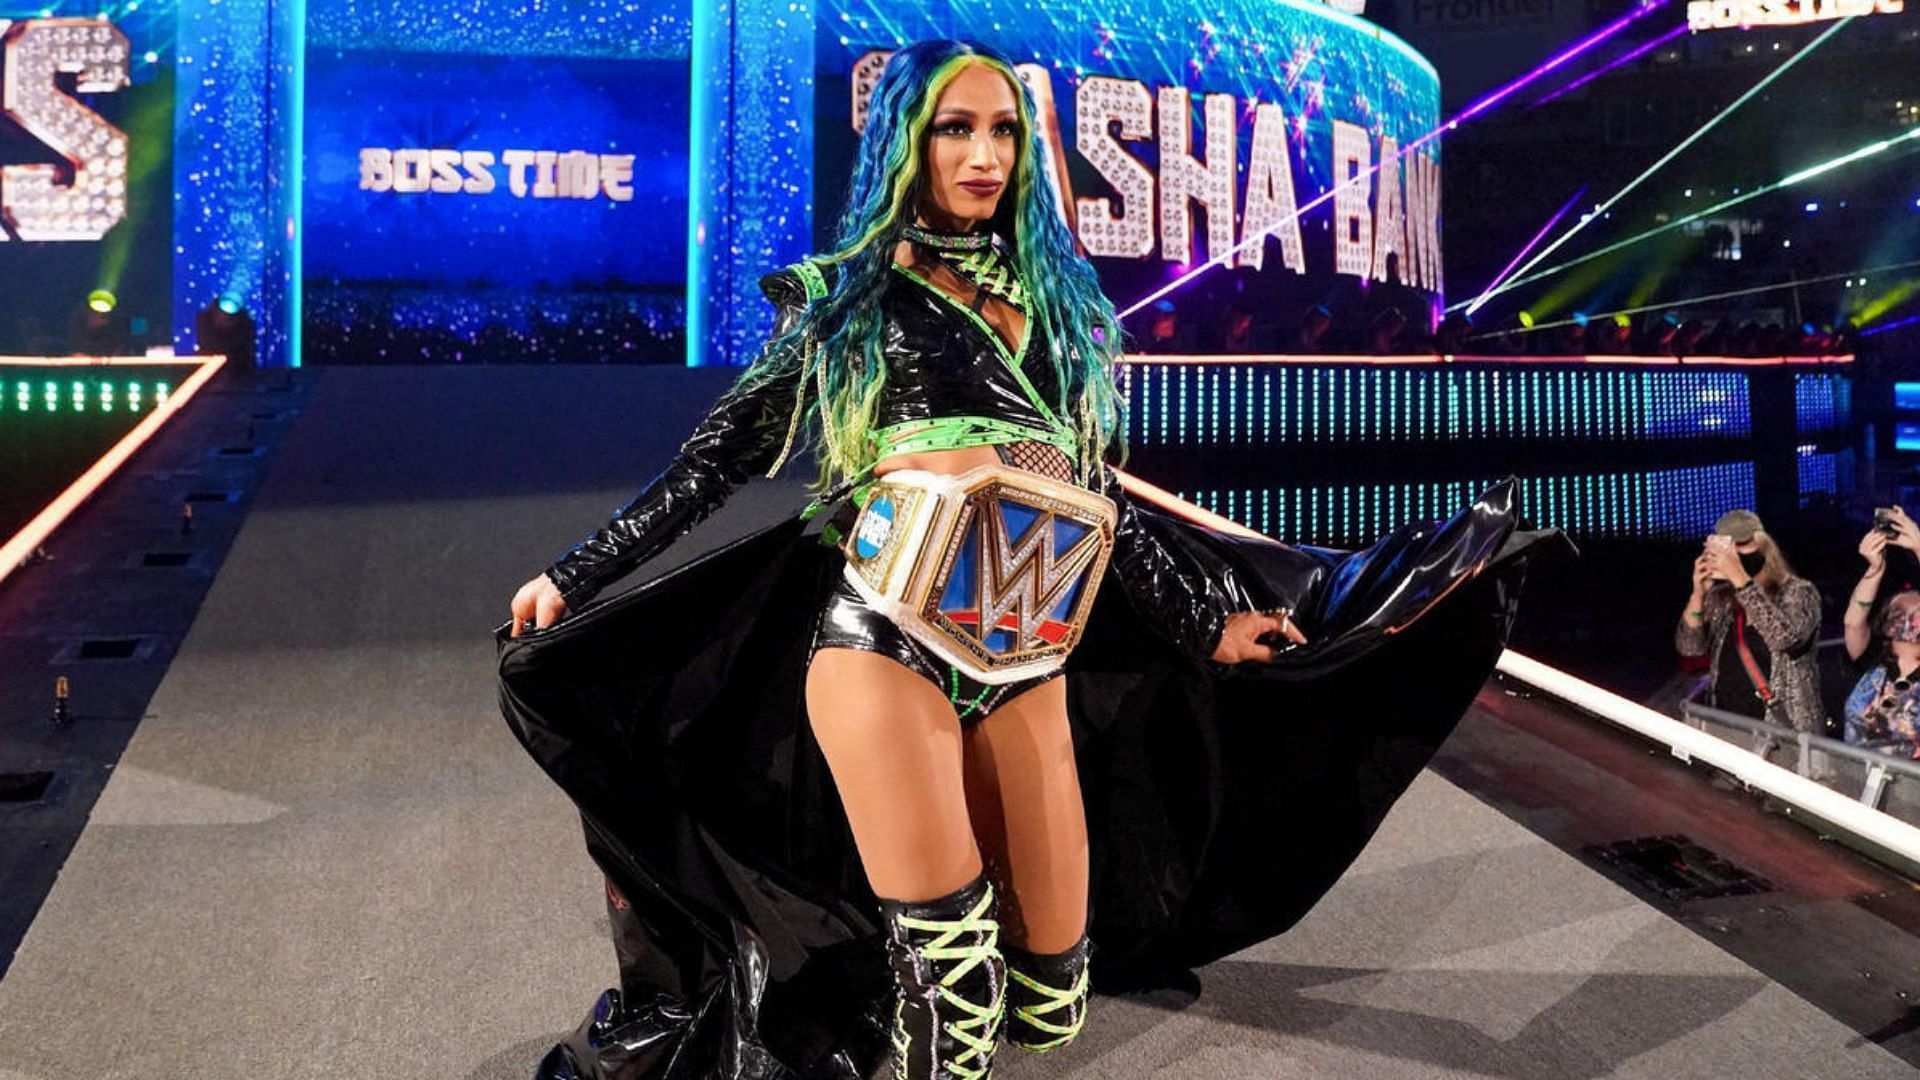 Sasha Banks is a former WWE Women